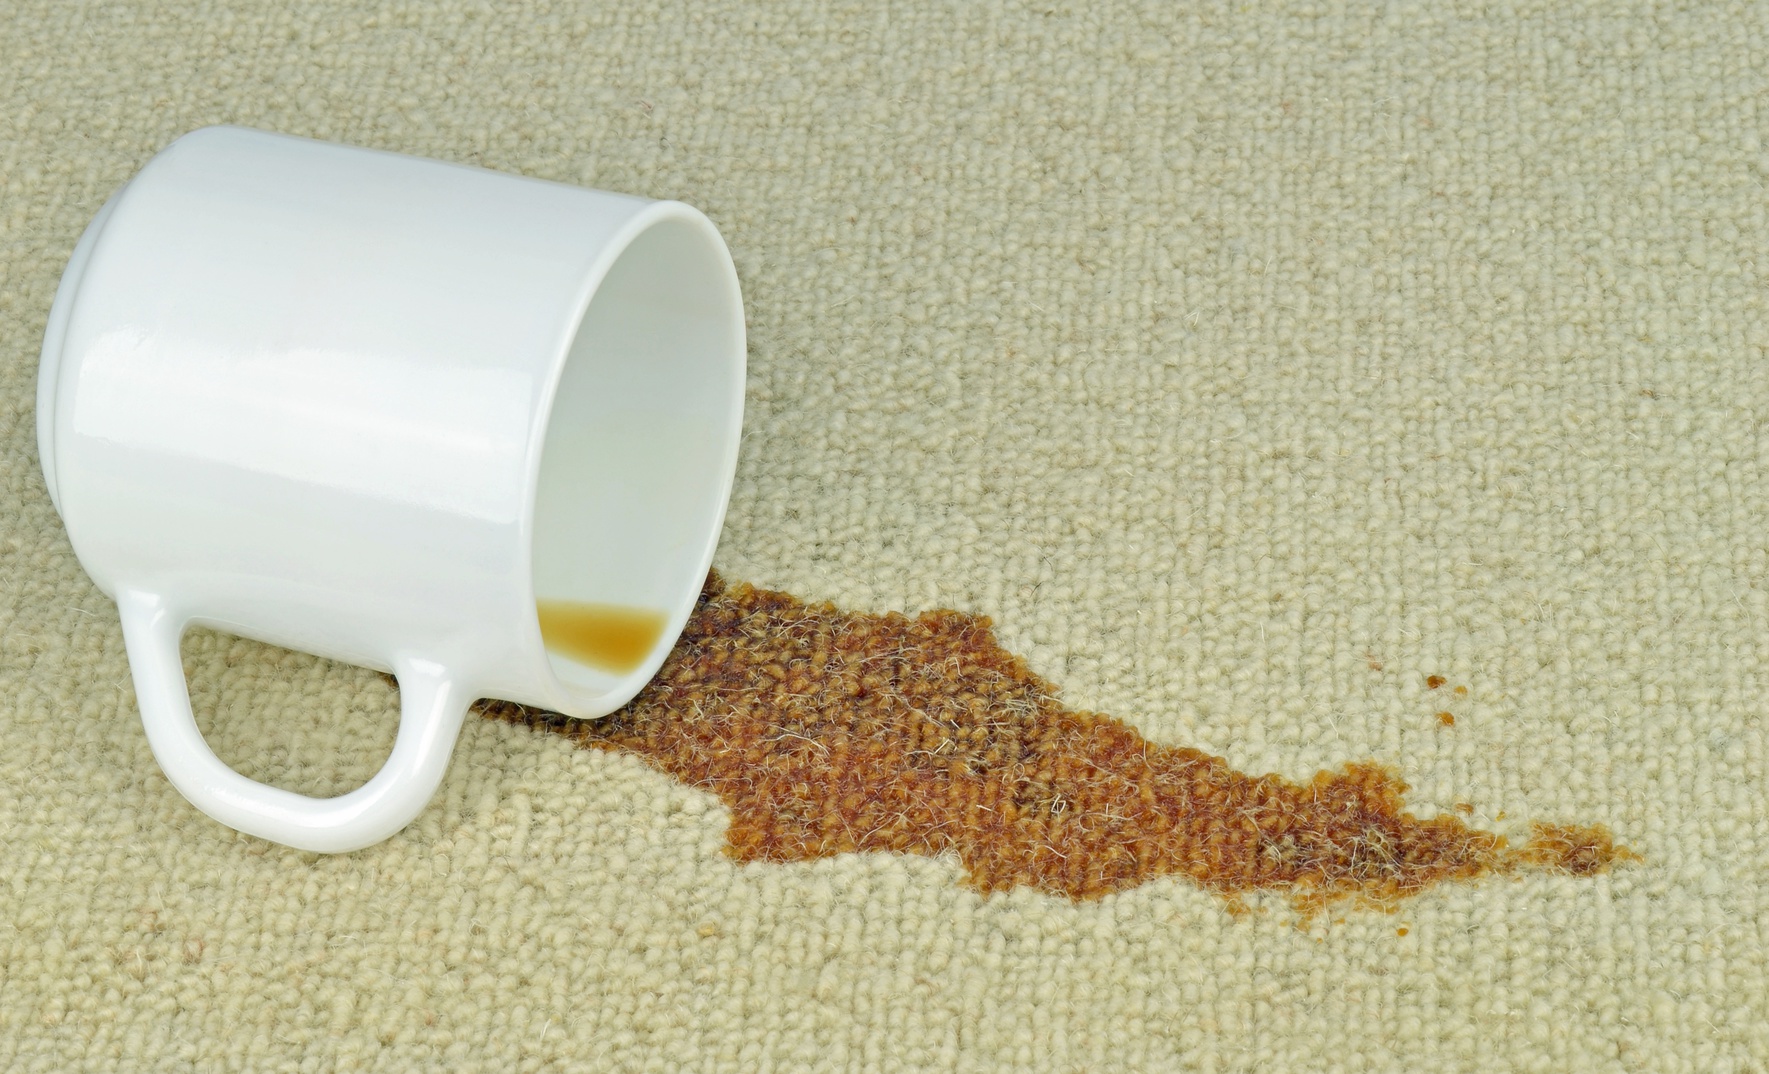 https://www.multi-clean.com/wp-content/uploads/2016/11/spilled-coffee.jpg